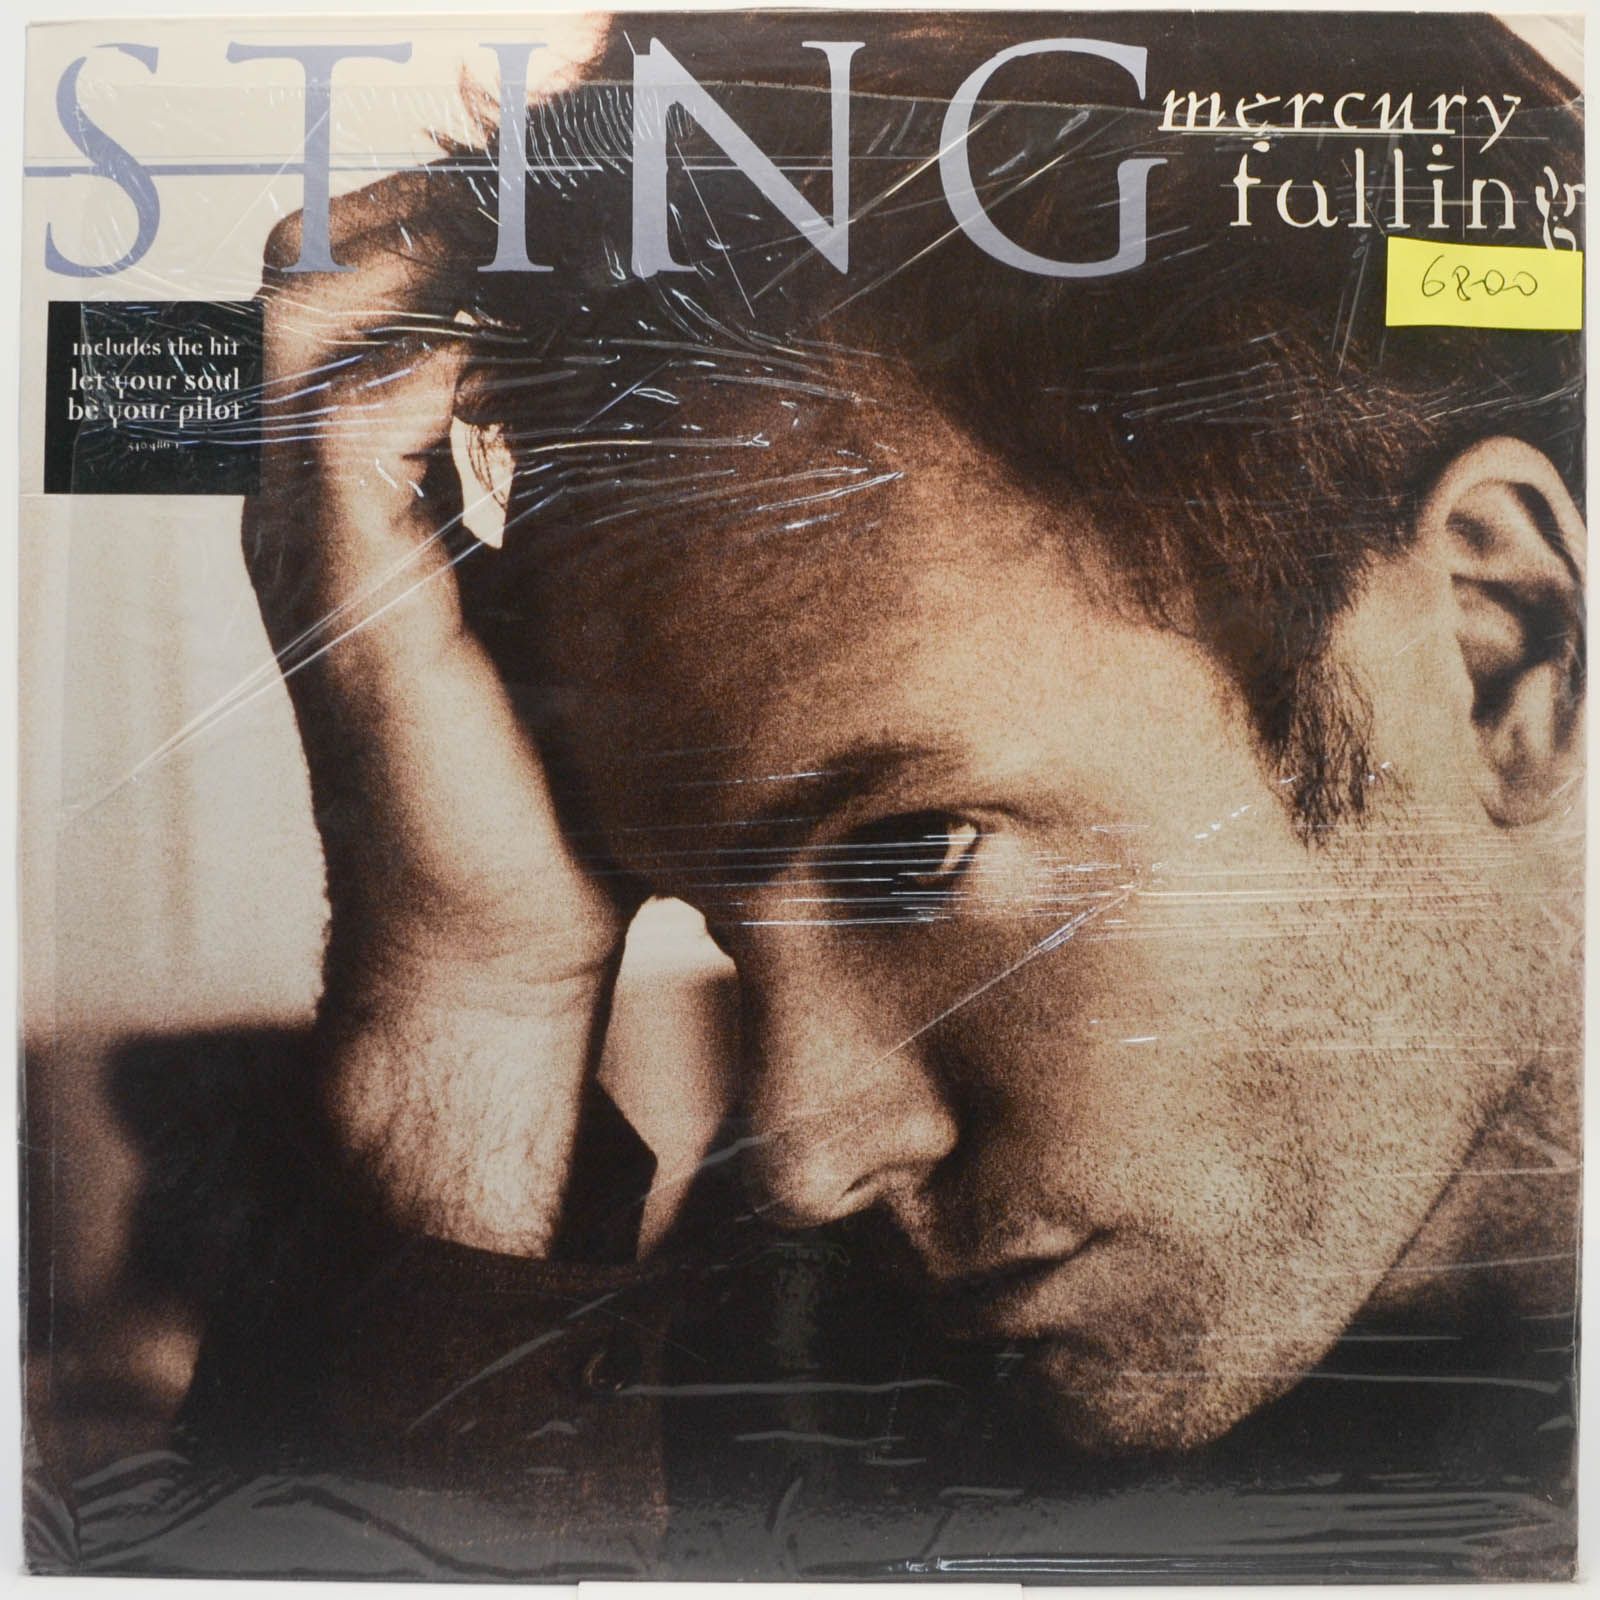 Sting — Mercury Falling (1-st, UK), 1996